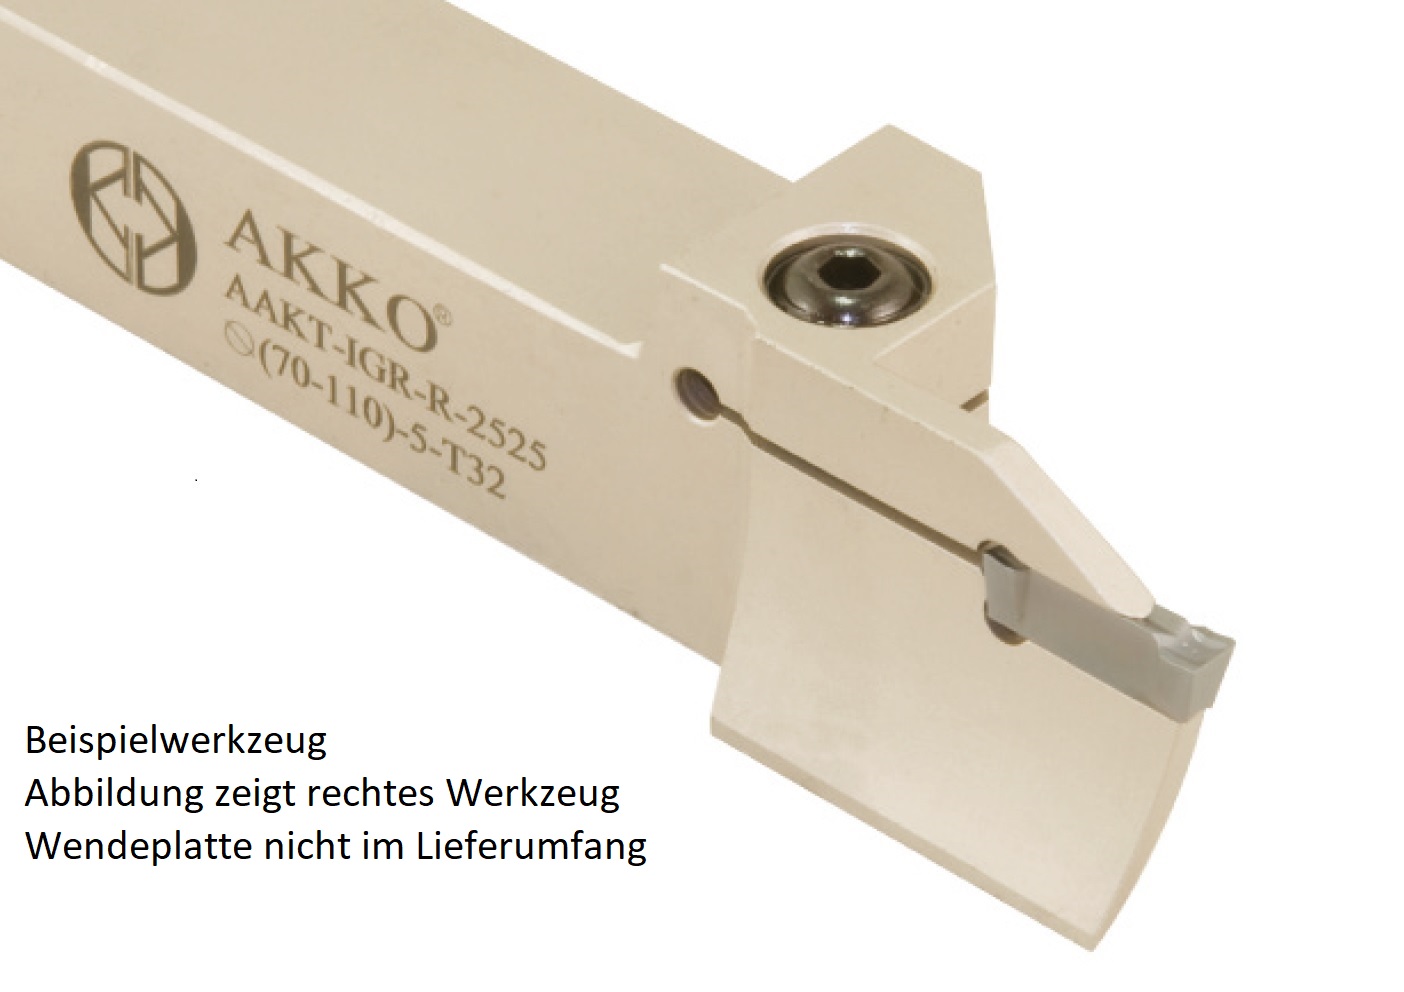 AKKO-Axial-Stechhalter, kompatibel mit Iscar-Stechplatte DGN / GRP-5
Schaft-ø 25x25, Einstechbereich ø 70 - ø 110 mm, links